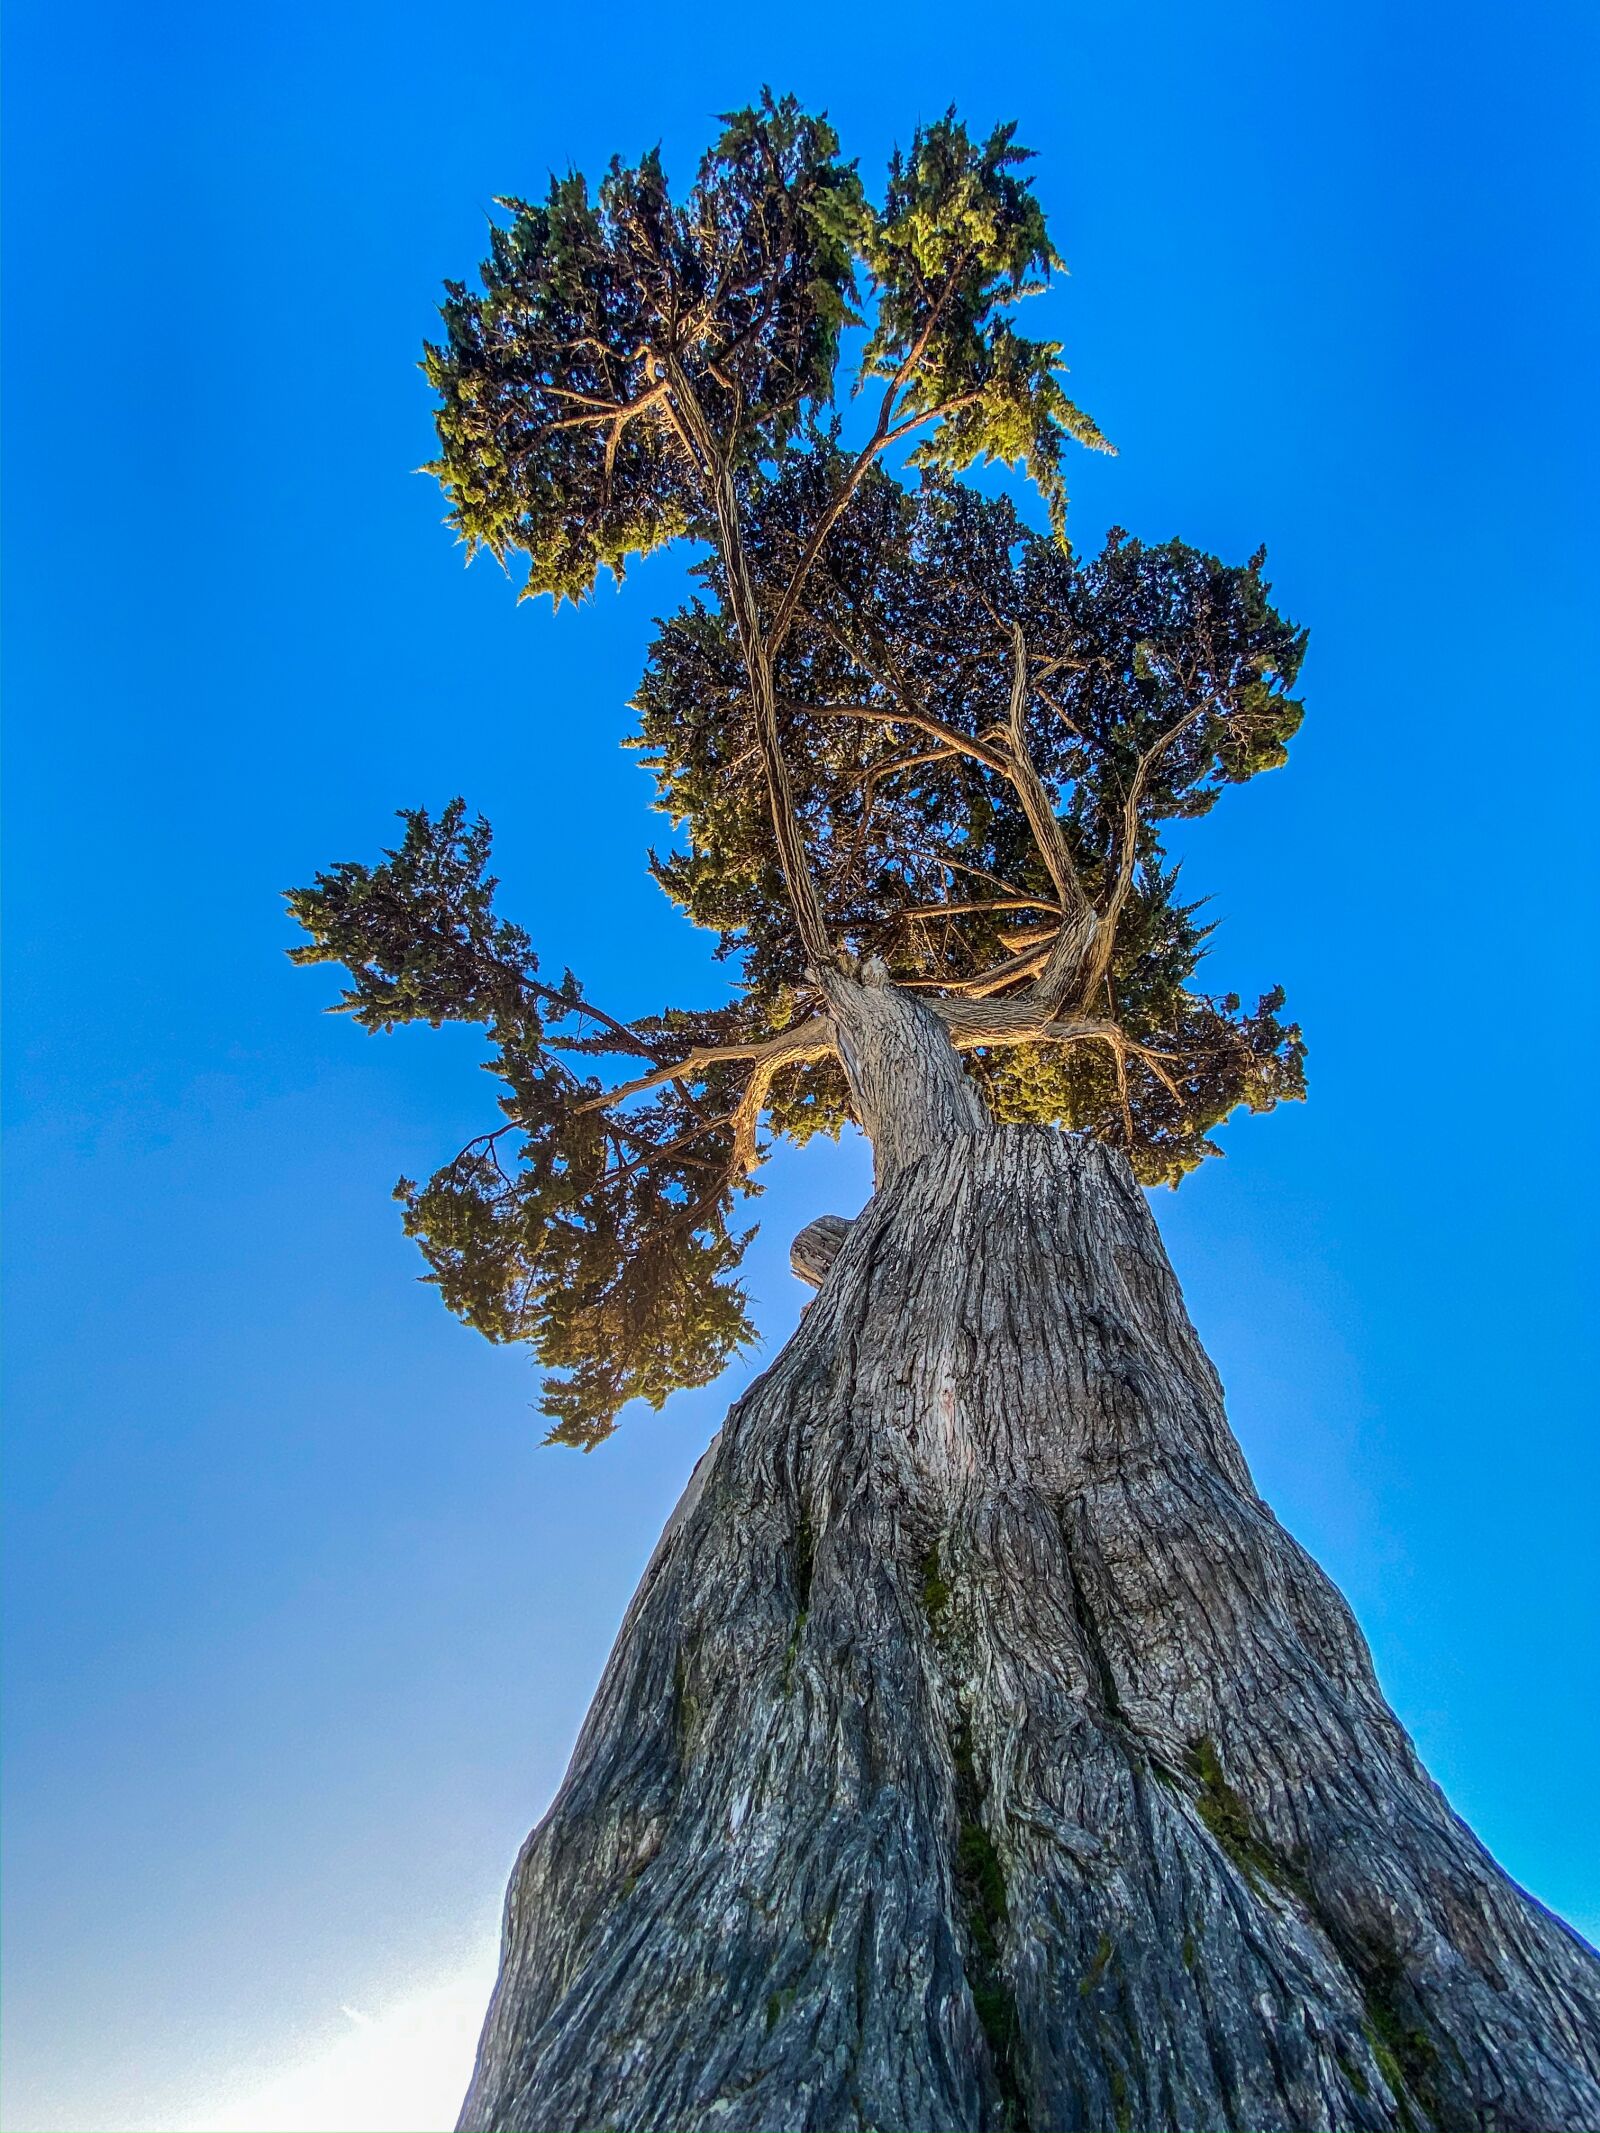 iPhone 11 Pro back triple camera 1.54mm f/2.4 sample photo. Cypress, tree, tree trunk photography